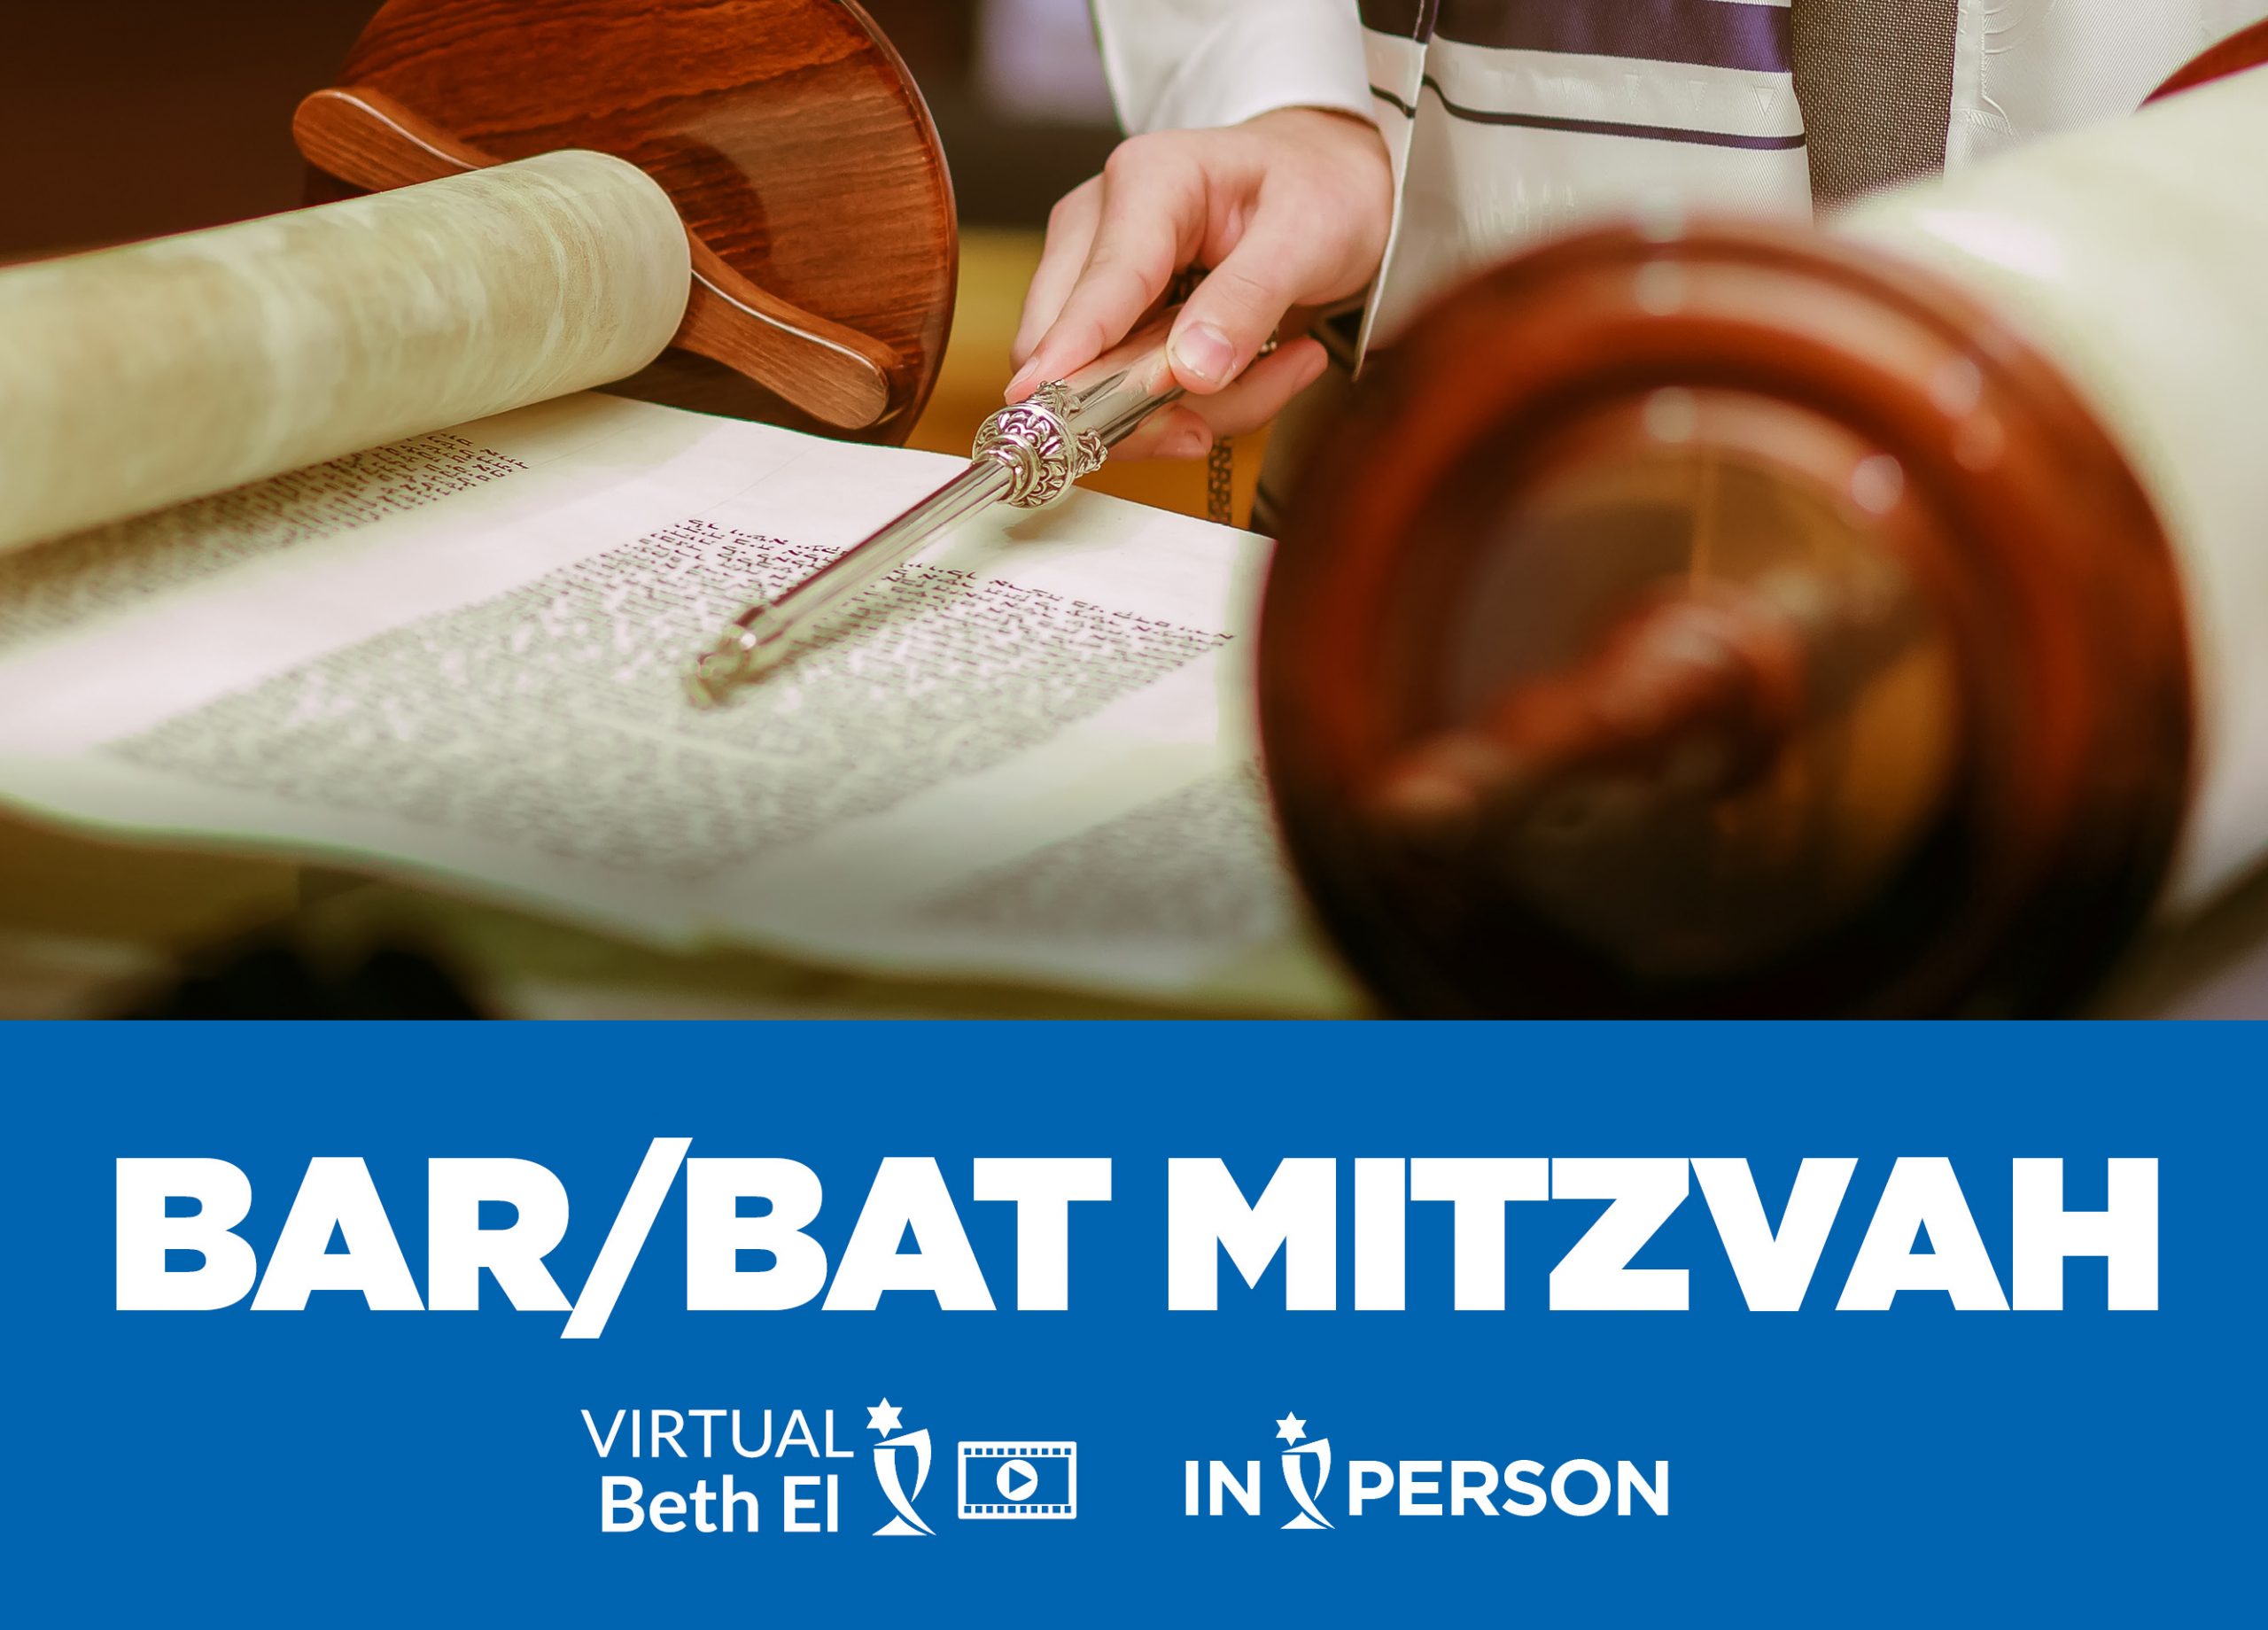 Bat/Bat Mitzvah event graphic for Temple Beth El of Boca Raton